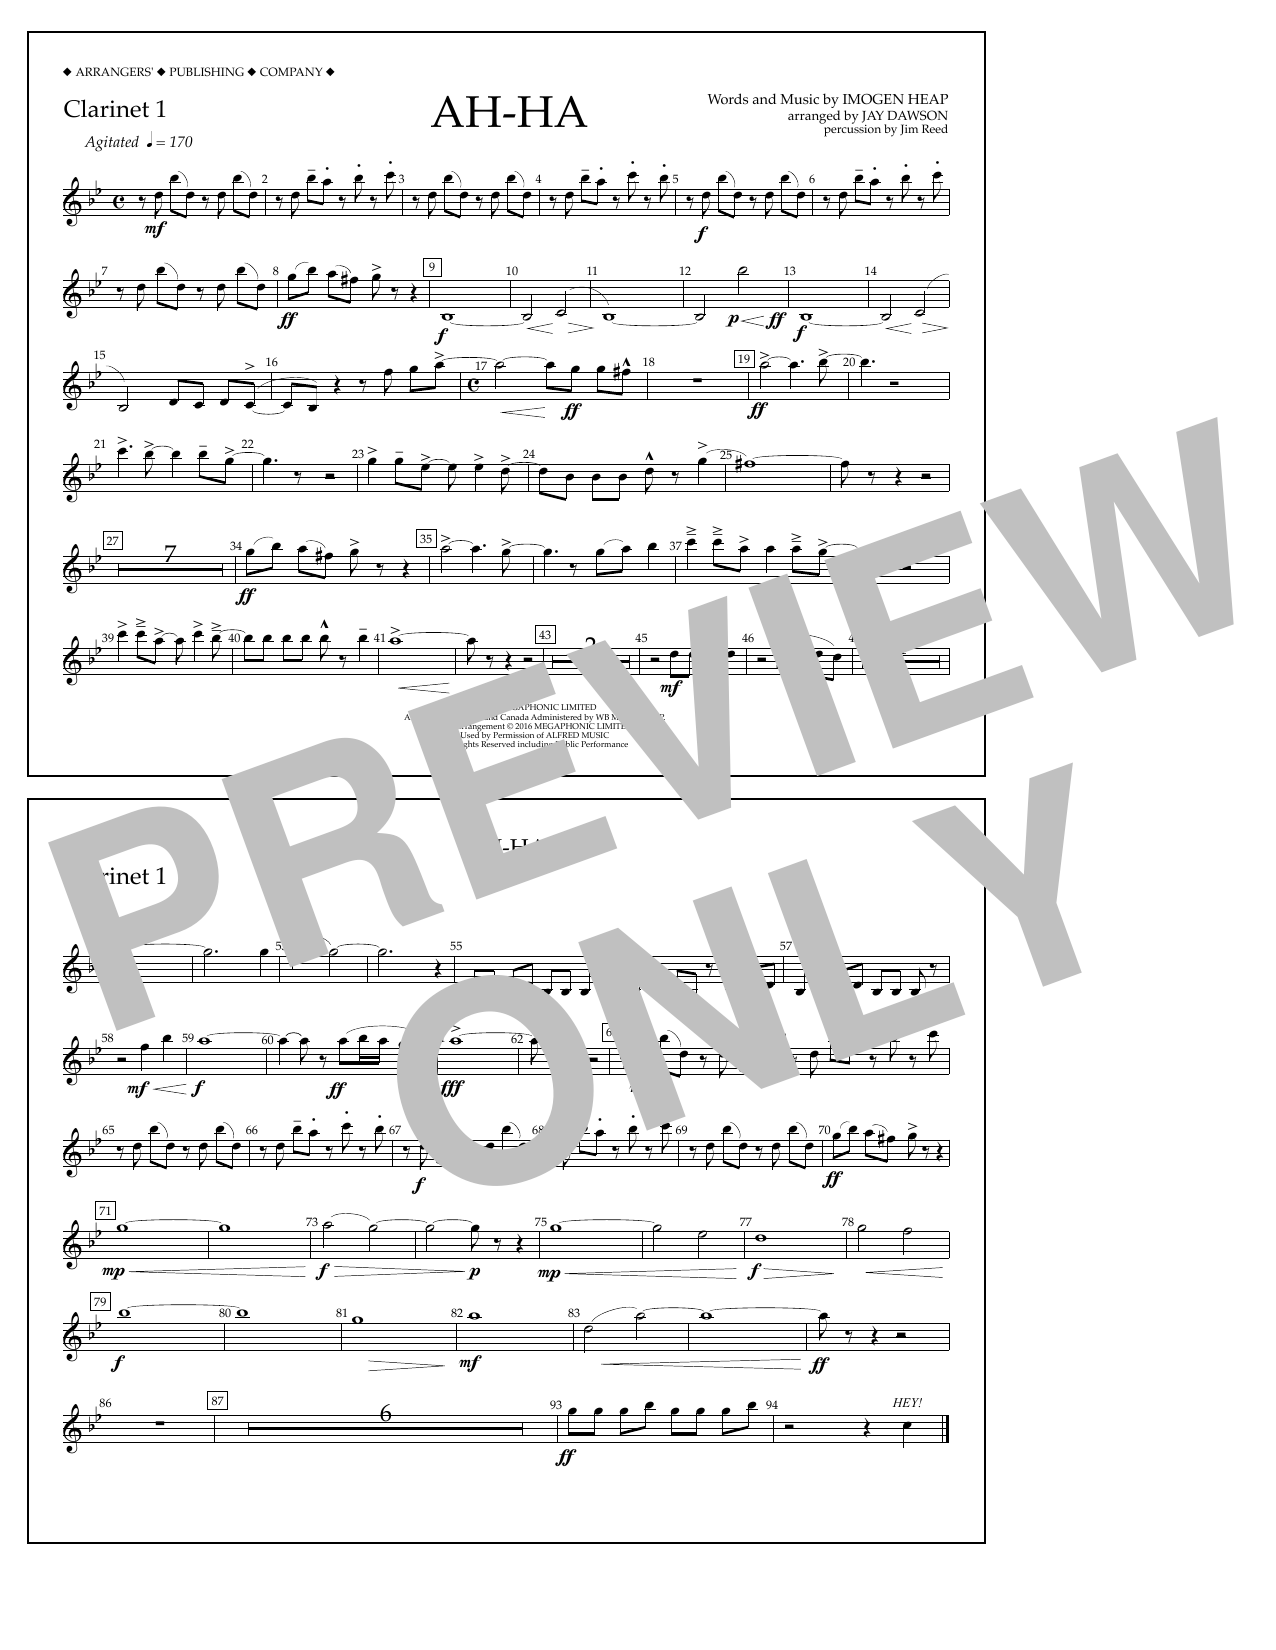 Download Jay Dawson Ah-ha - Clarinet 1 Sheet Music